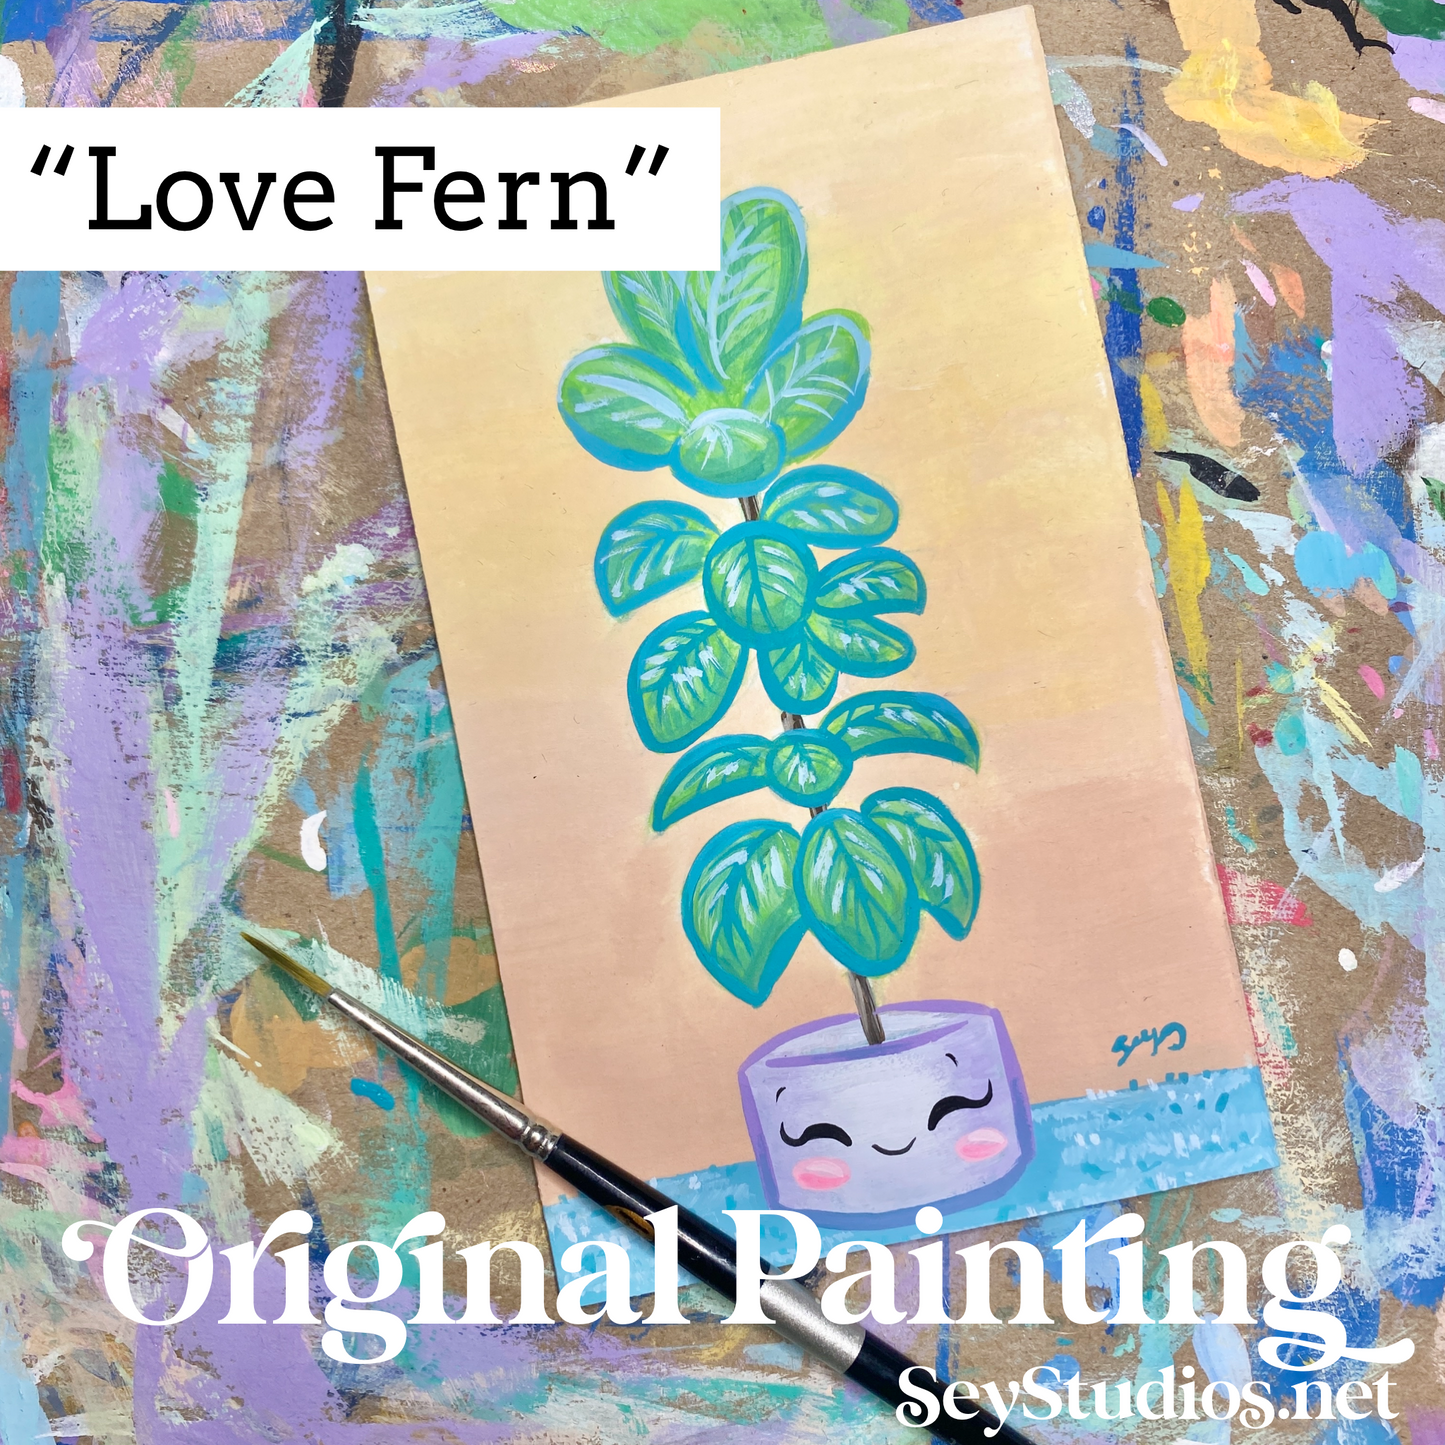 Original - “Love Fern” painting